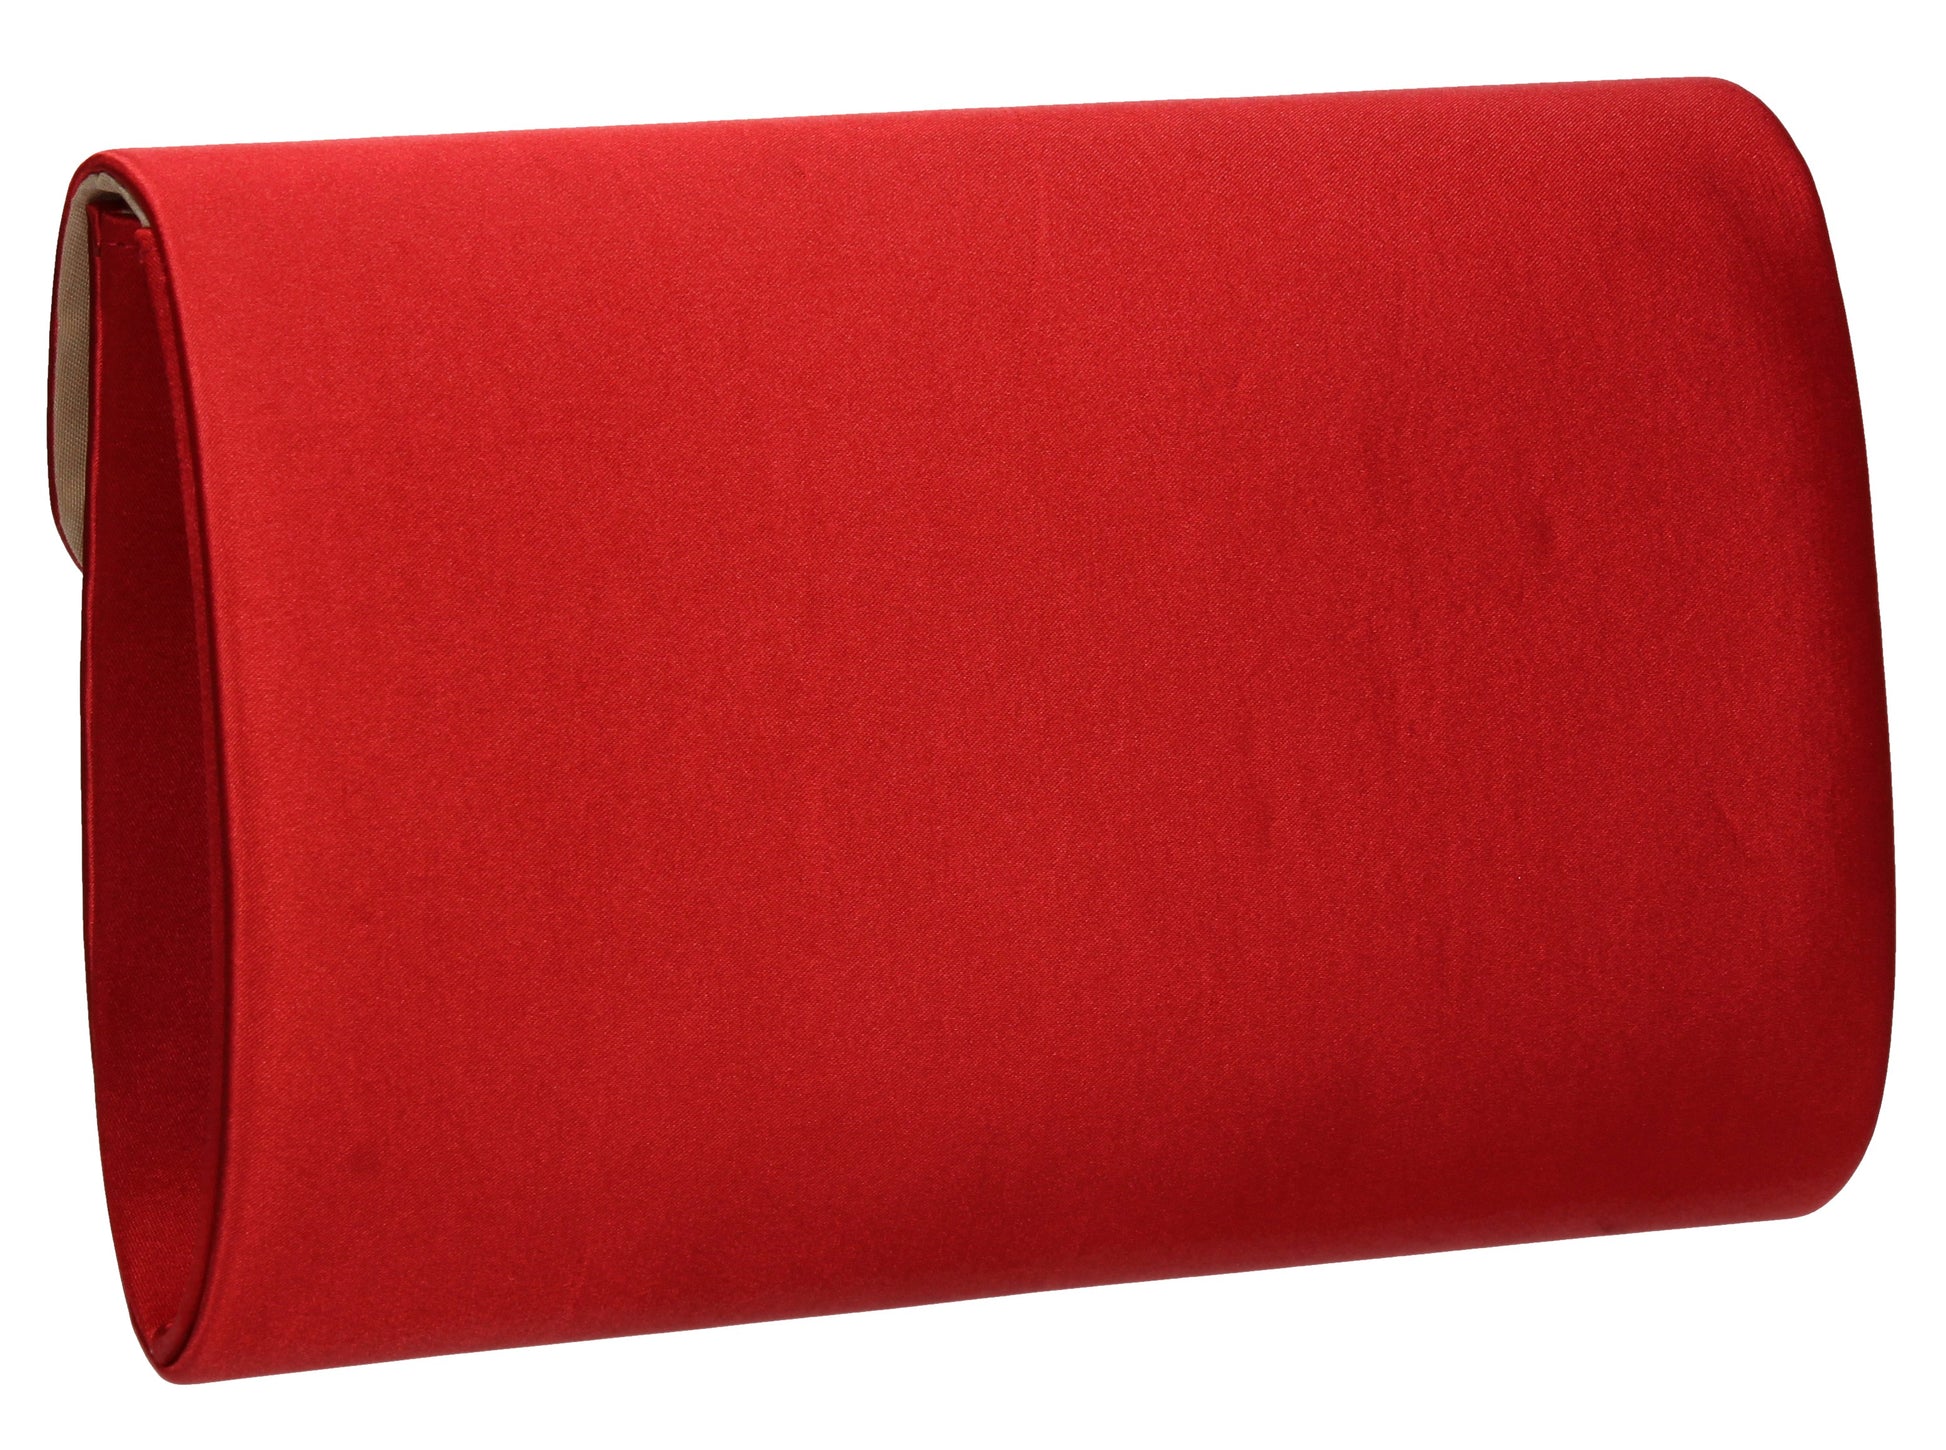 SWANKYSWANS Leila Clutch Bag Red Cute Cheap Clutch Bag For Weddings School and Work